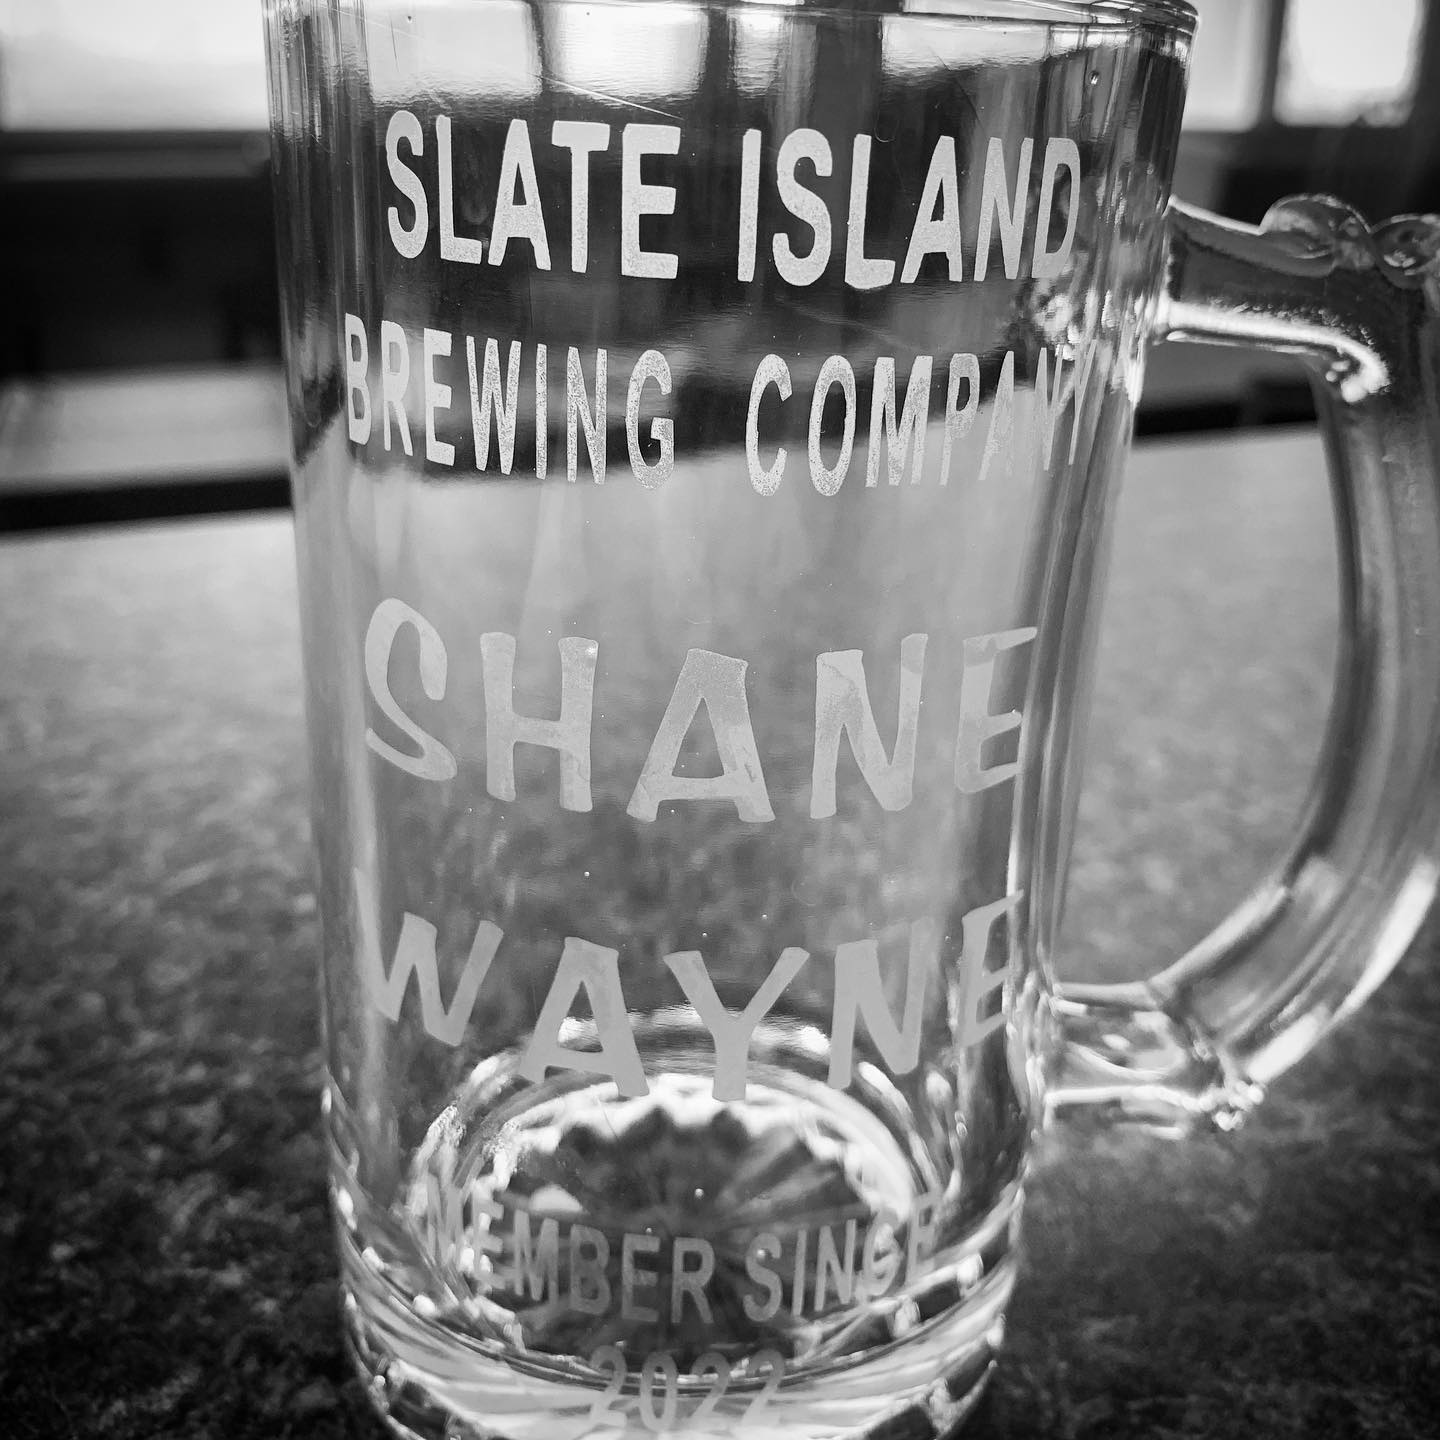 Slate Island Brewing Company